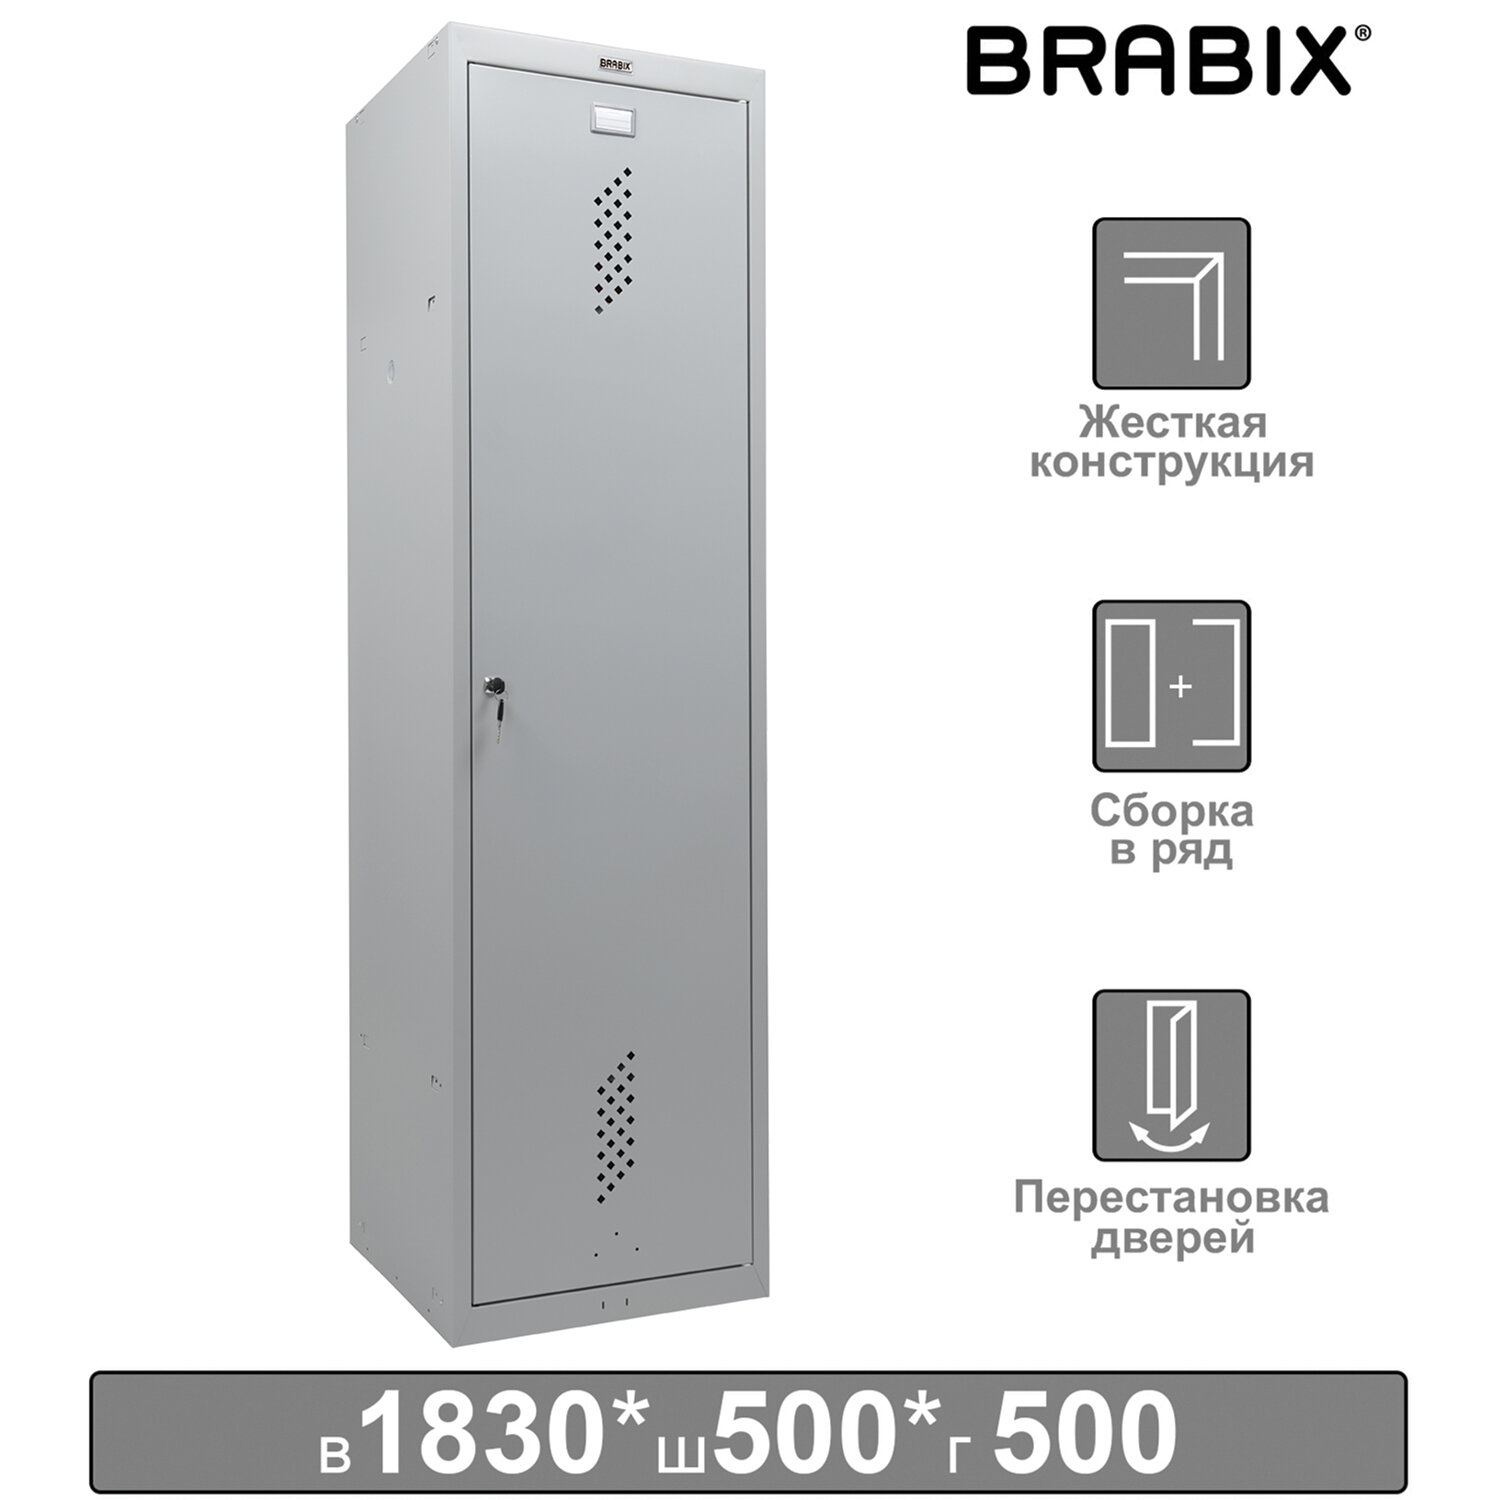     BRABIX LK 11-50, , 2 , 1830500500 , 22 , 291132, S230BR404102